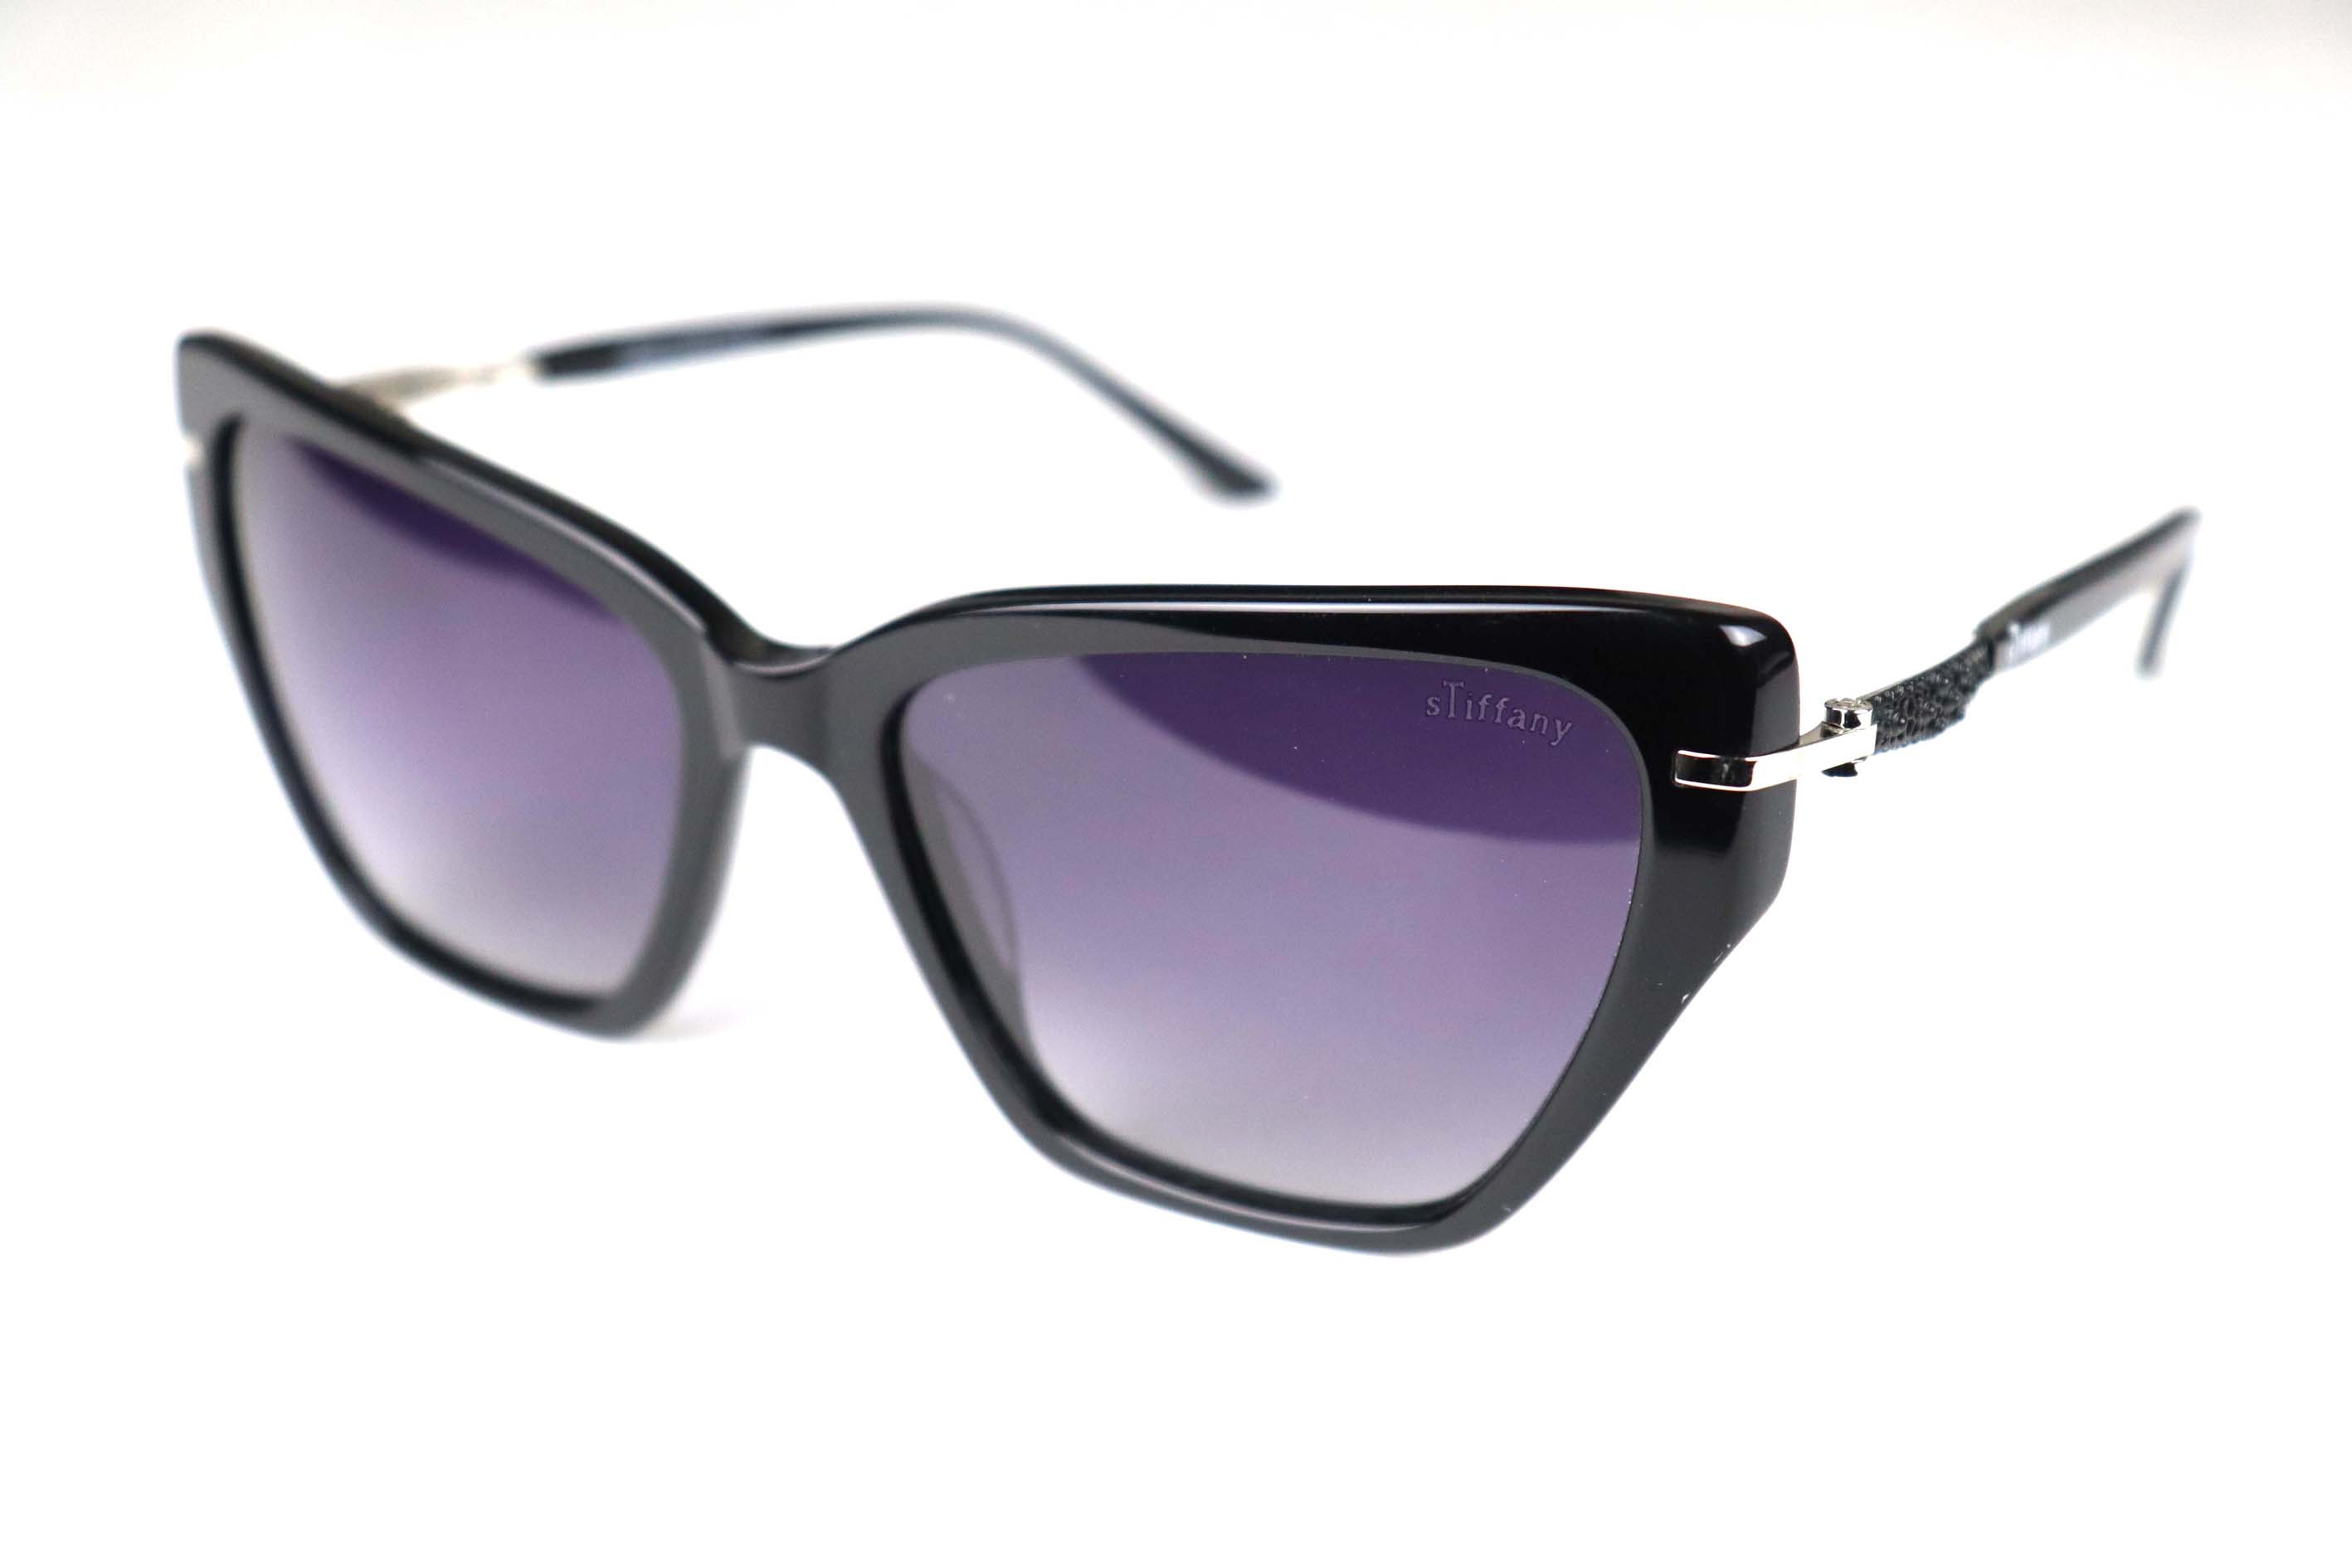 Stiffany Sunglasses -6125-C2-55-17-135